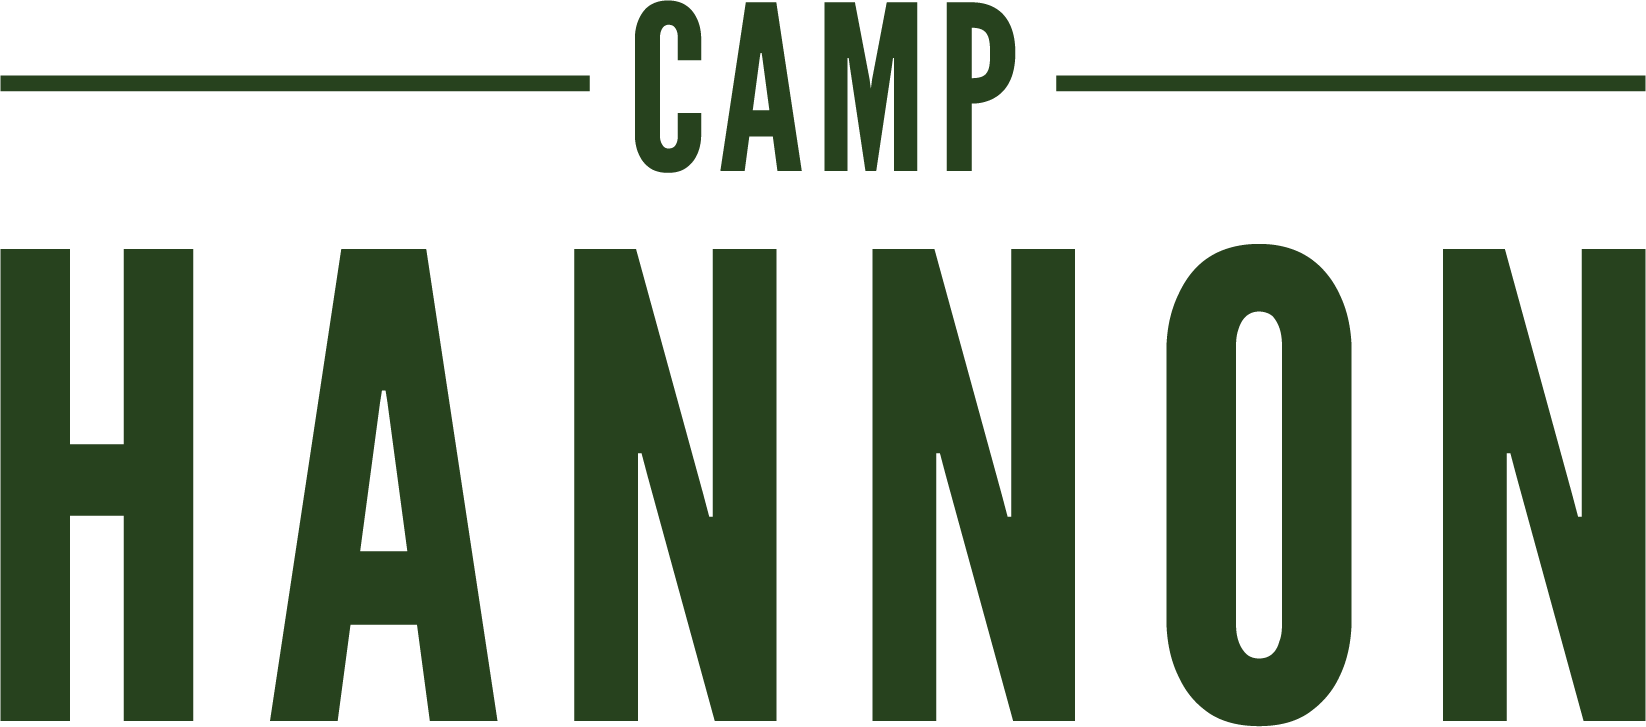 Camp Hannon